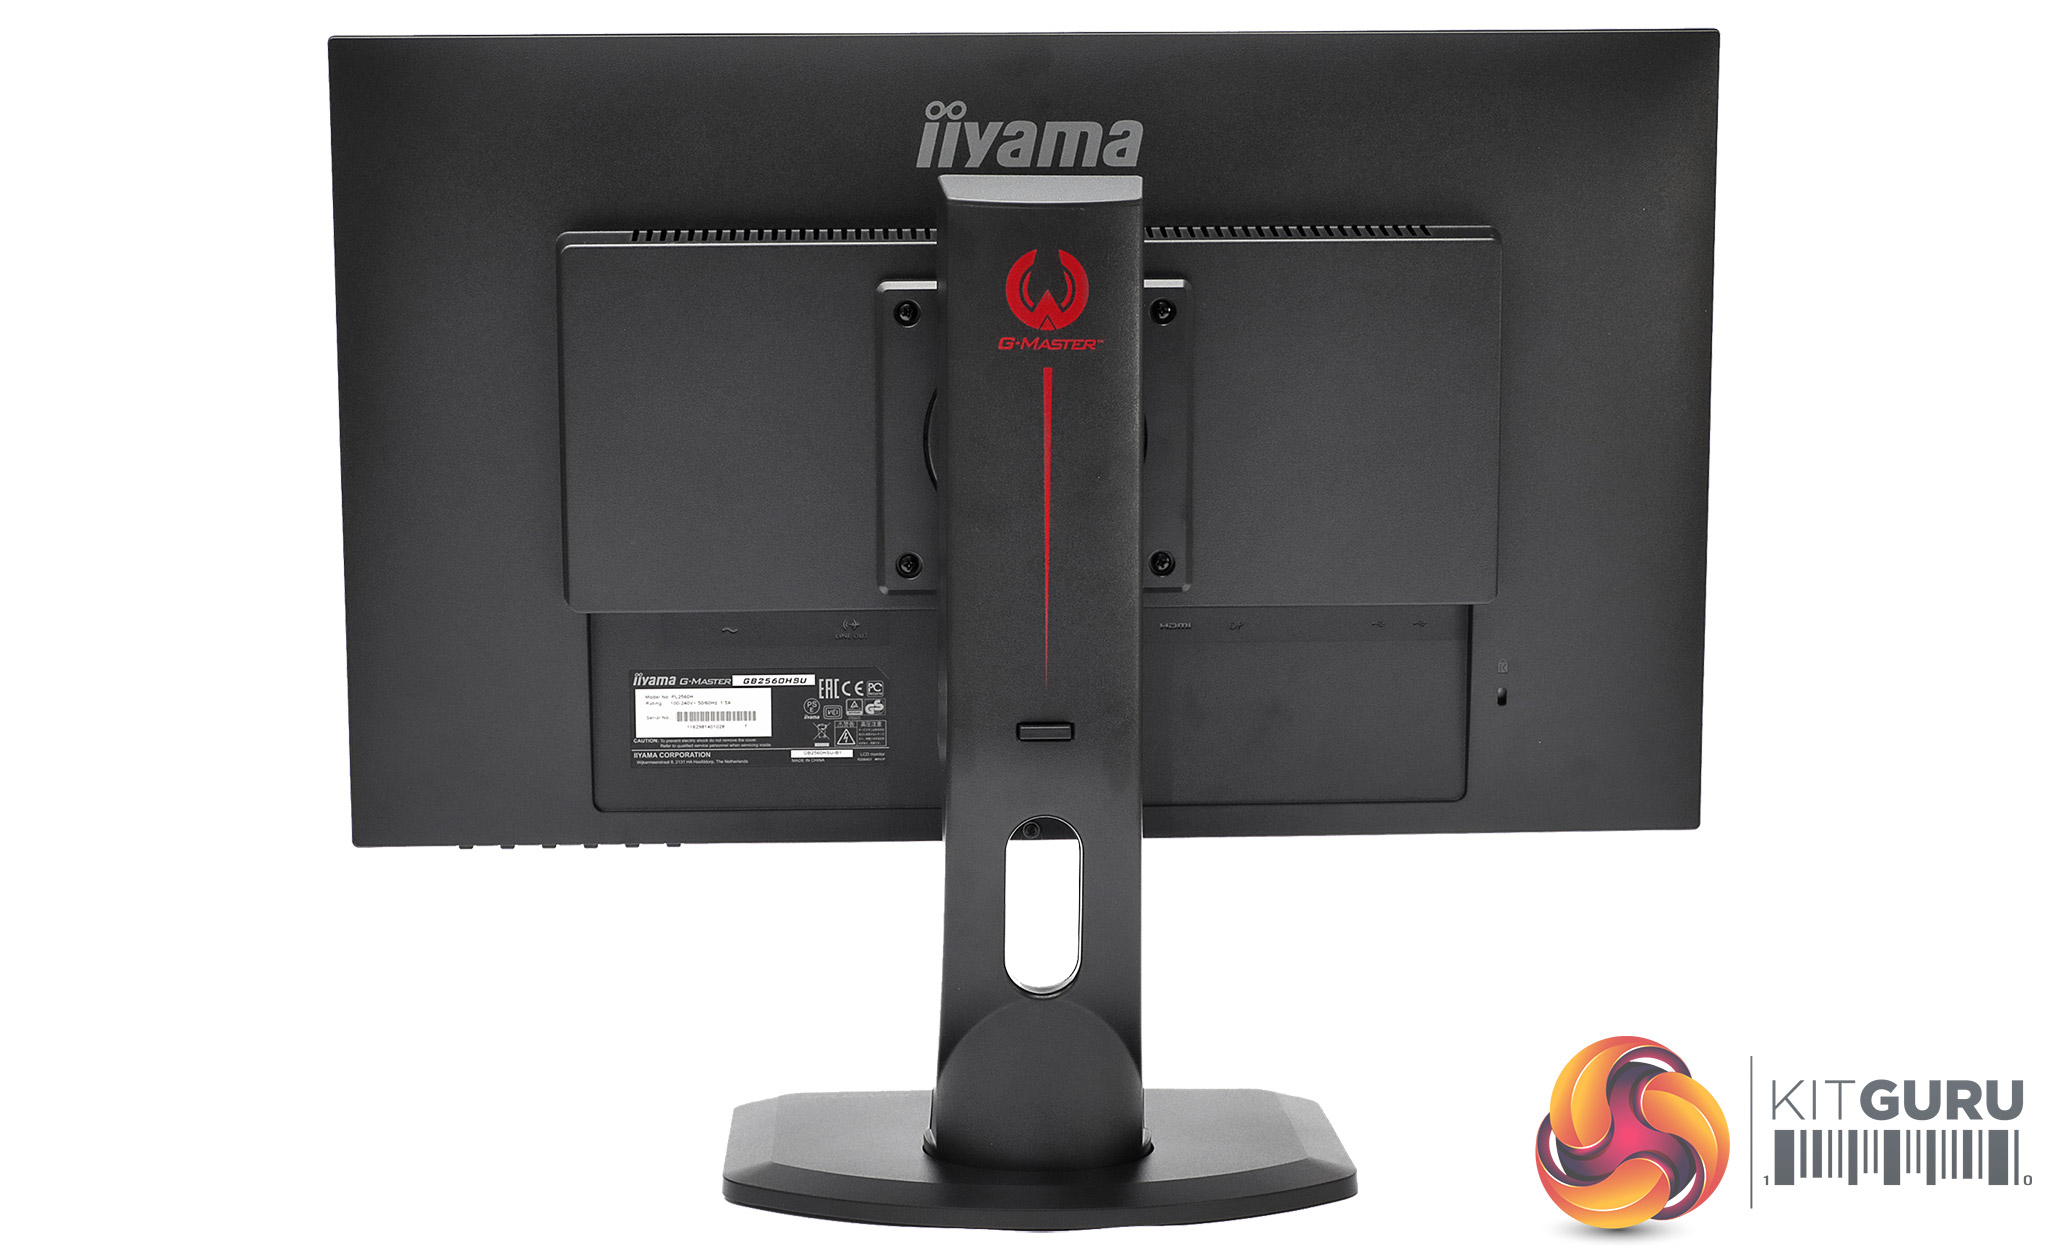 Iiyama Red Eagle G-MASTER GB2560HSU 24.5in 144Hz Monitor Review 